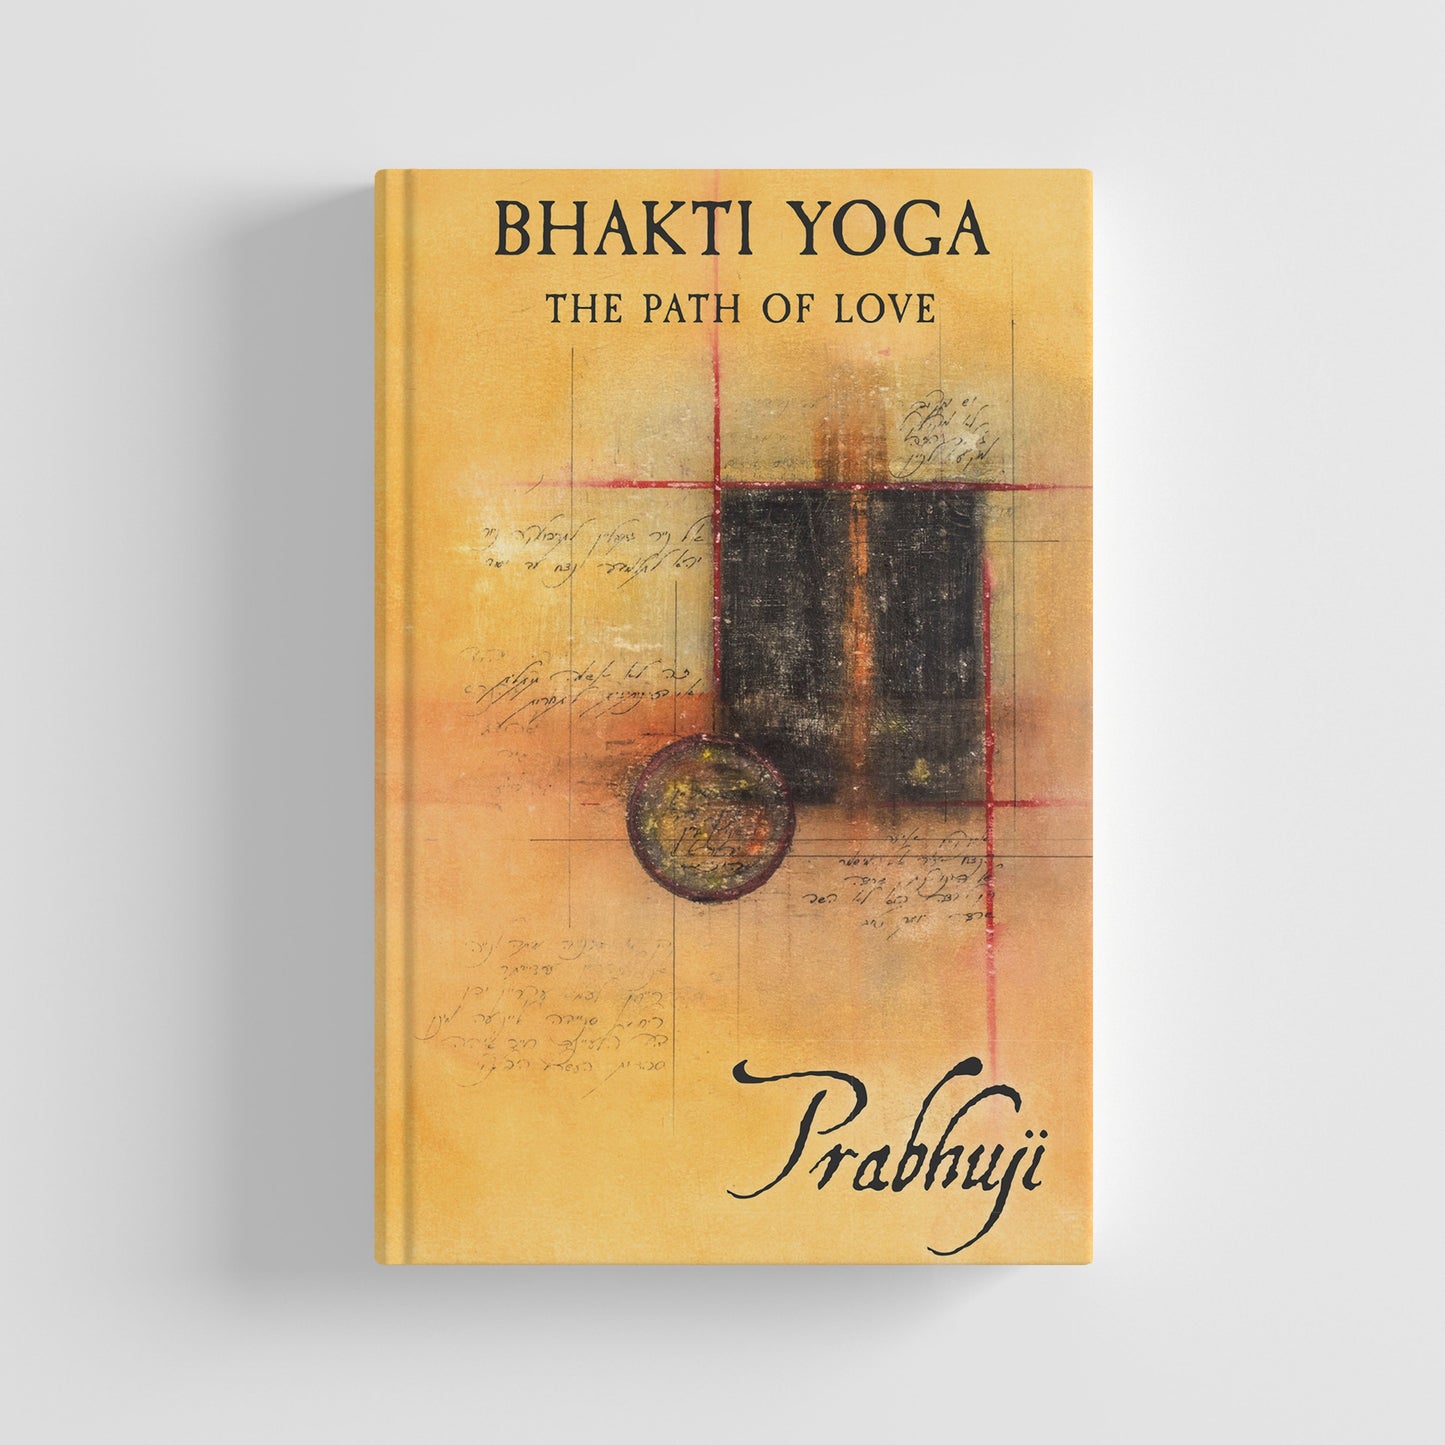 Book Bhakti yoga - The path of love by Prabhuji (Hard cover - English)